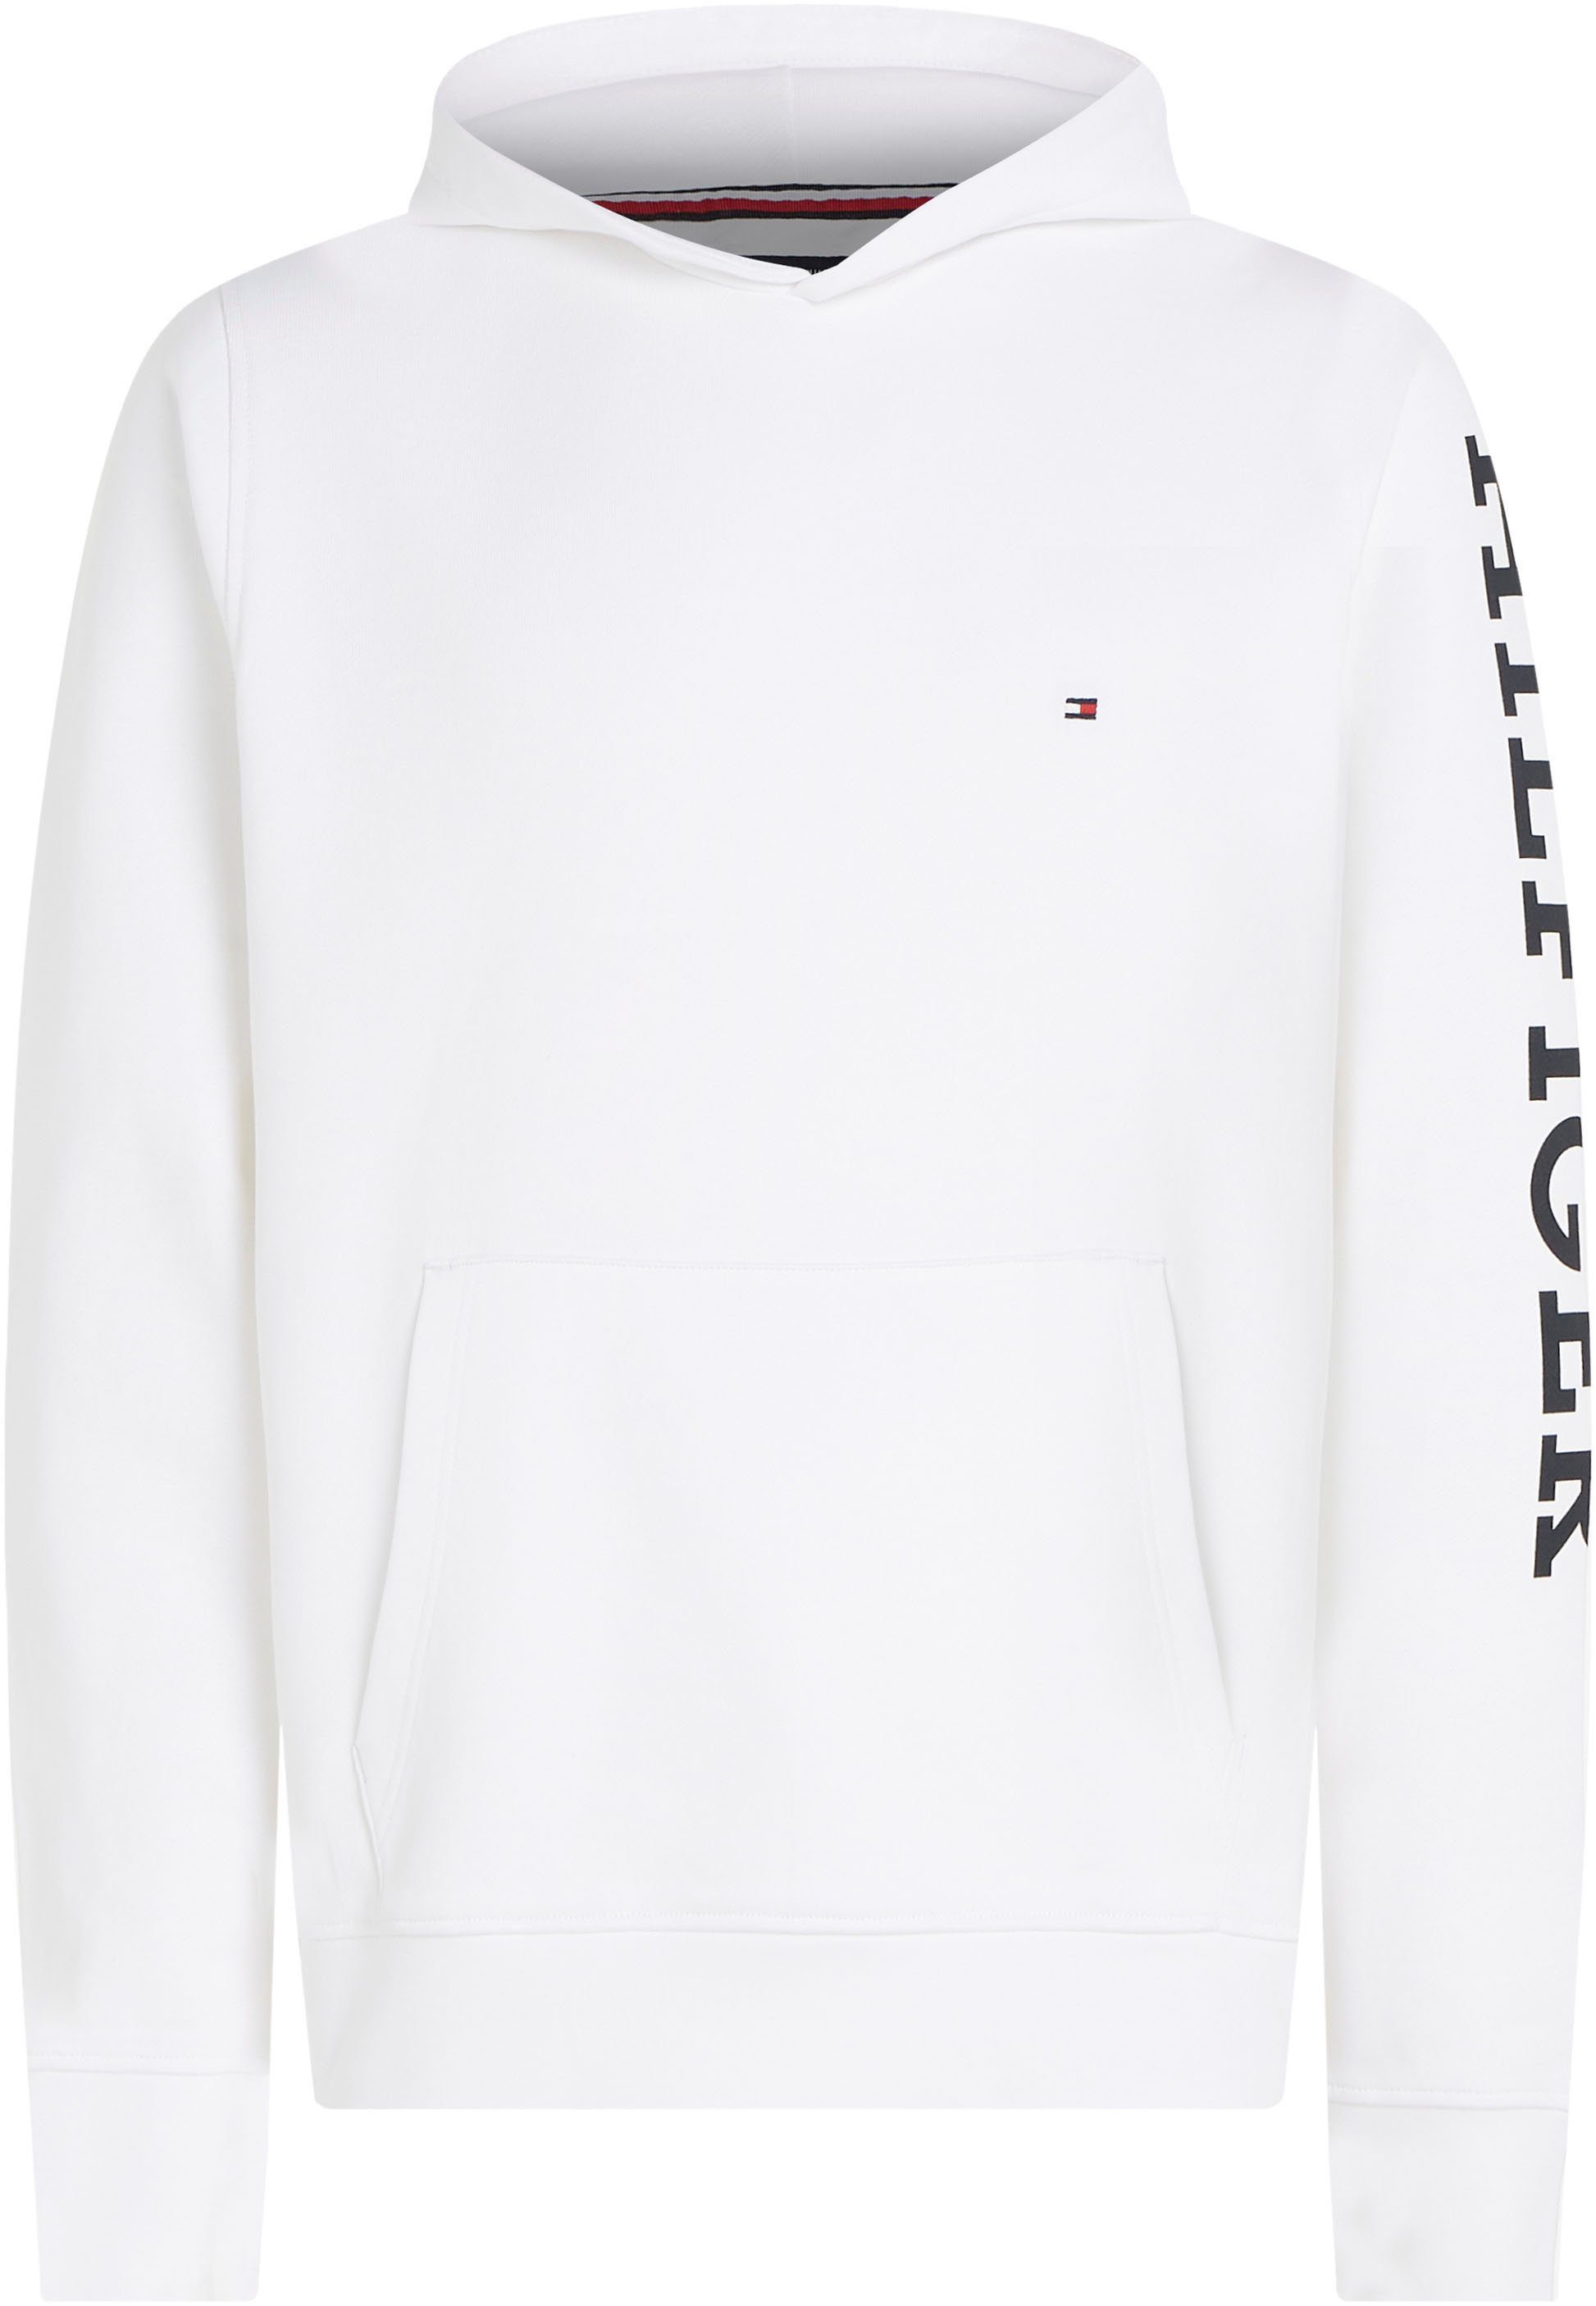 Tommy MONOTYPE Hilfiger HOODY White Sweatshirt